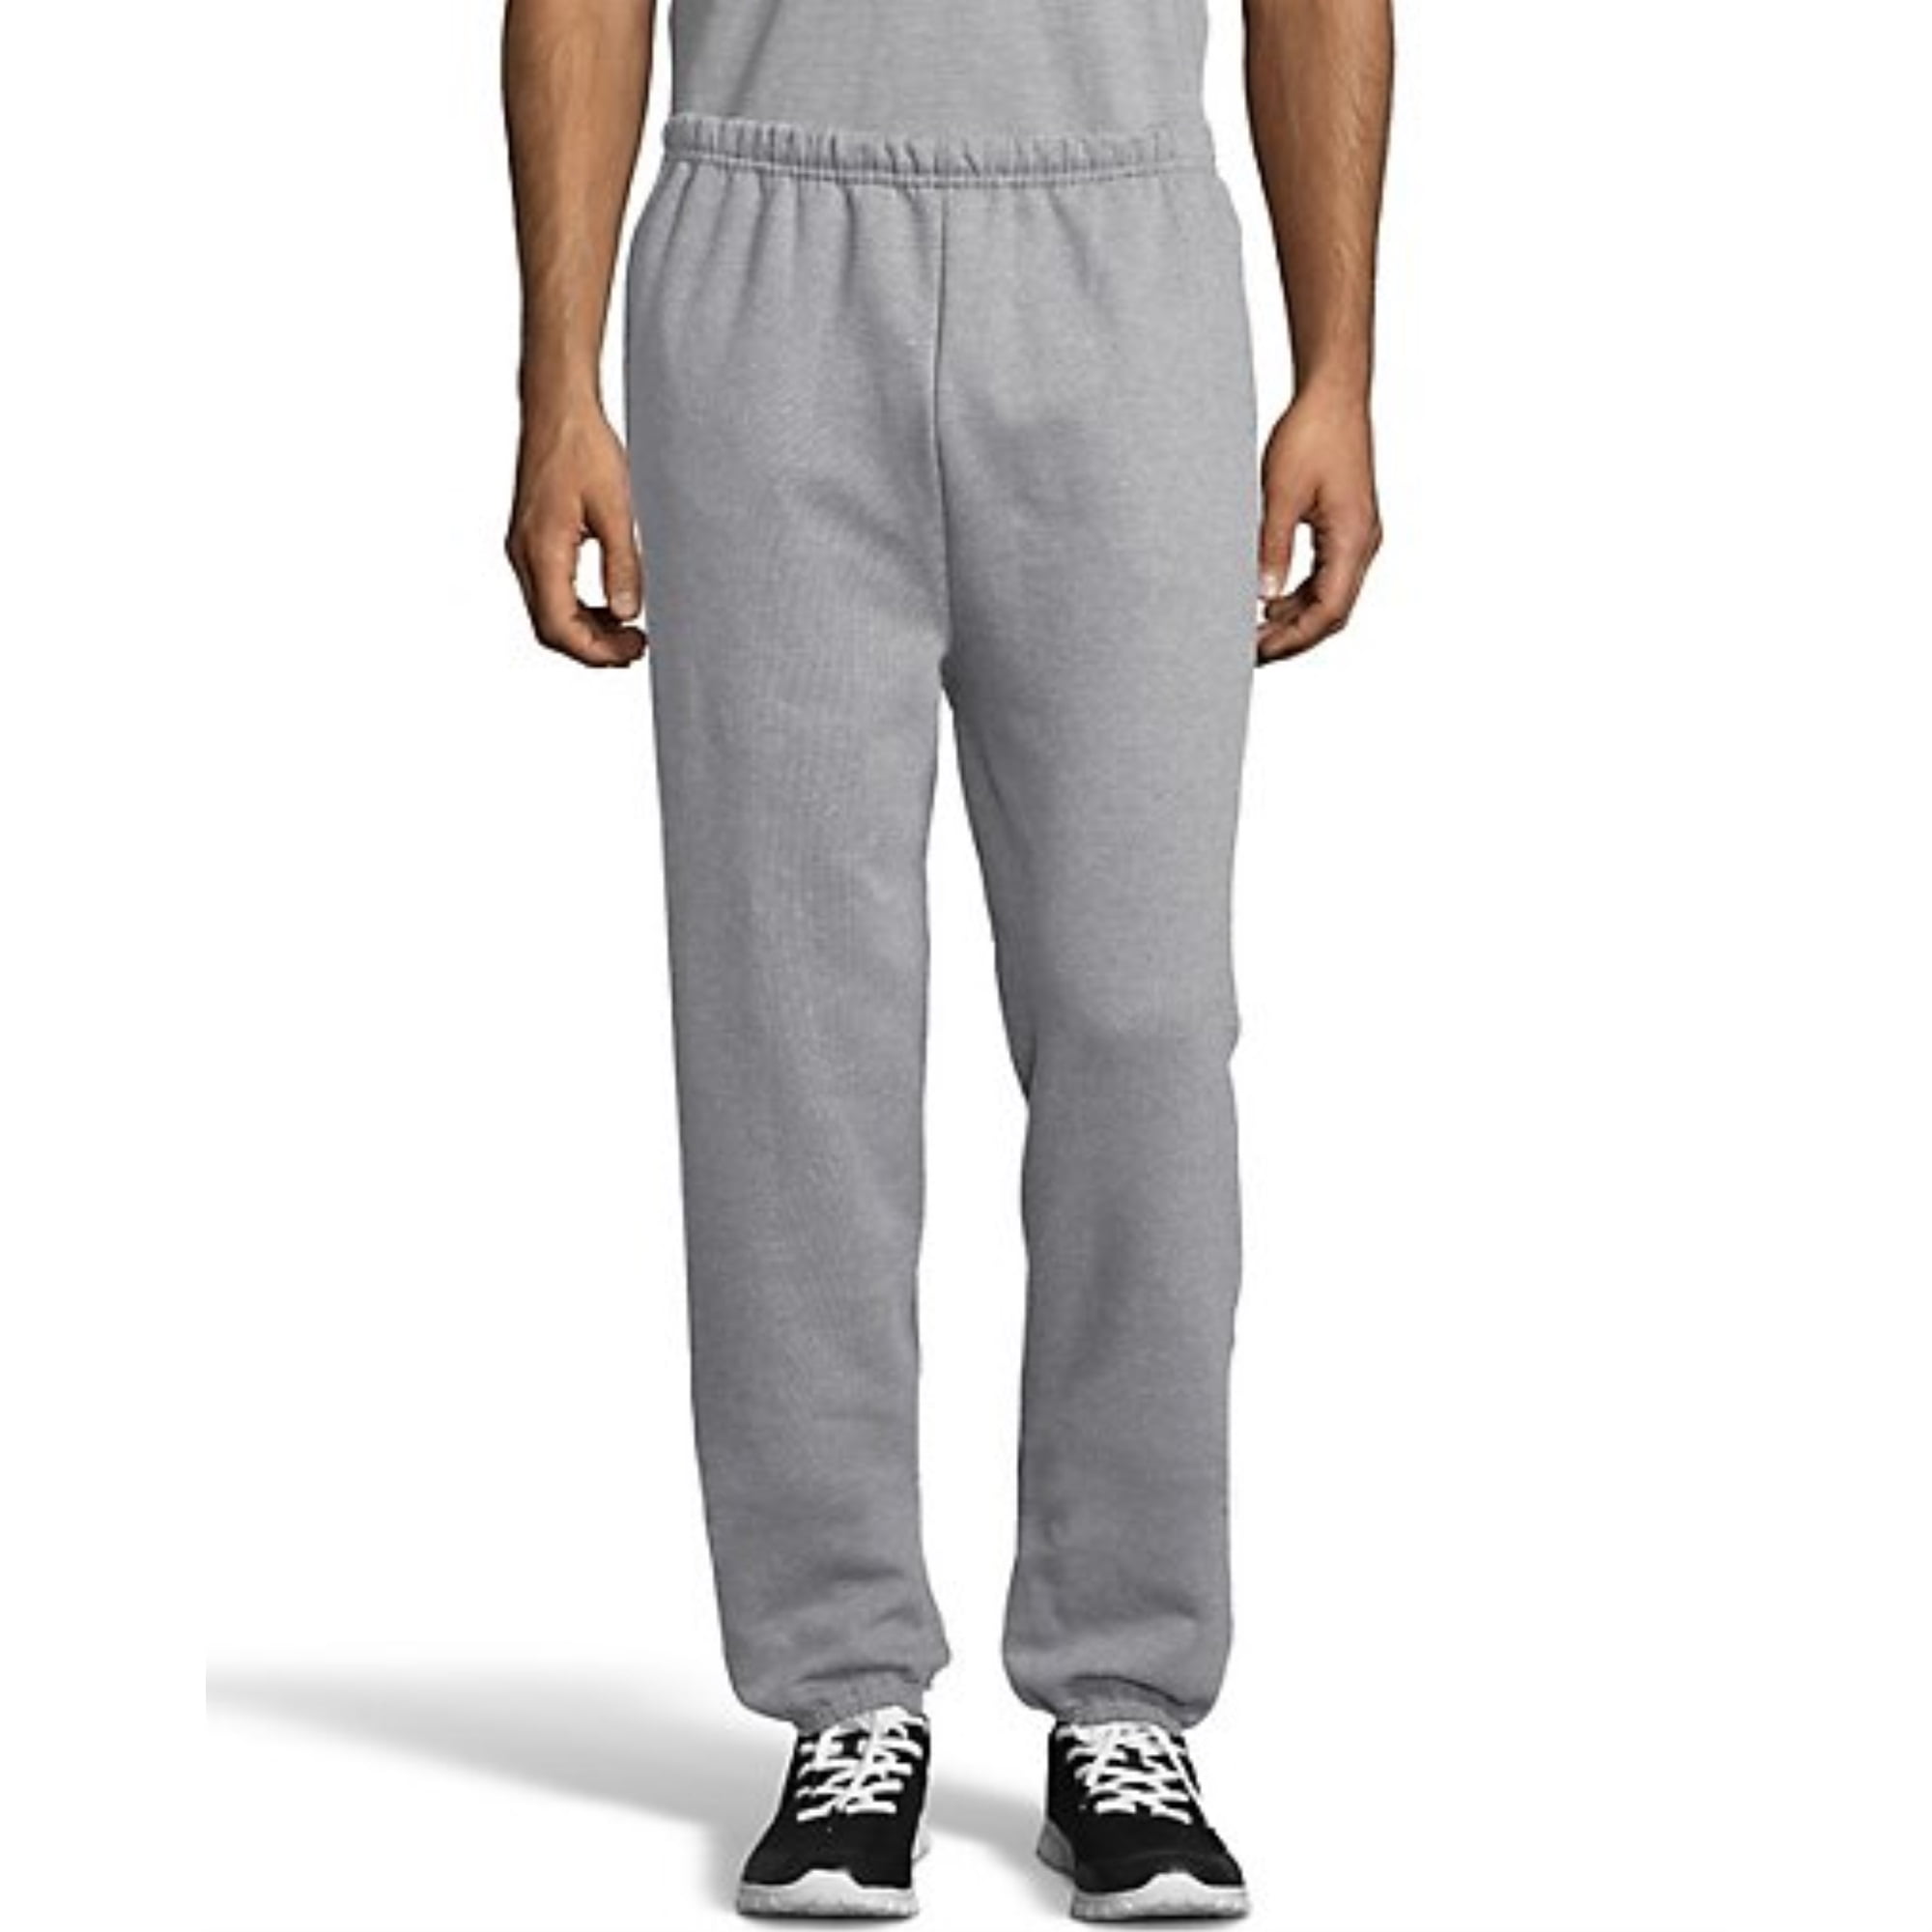 Hanes Sport Ultimate Cotton Men's Fleece Sweatpants With Pockets